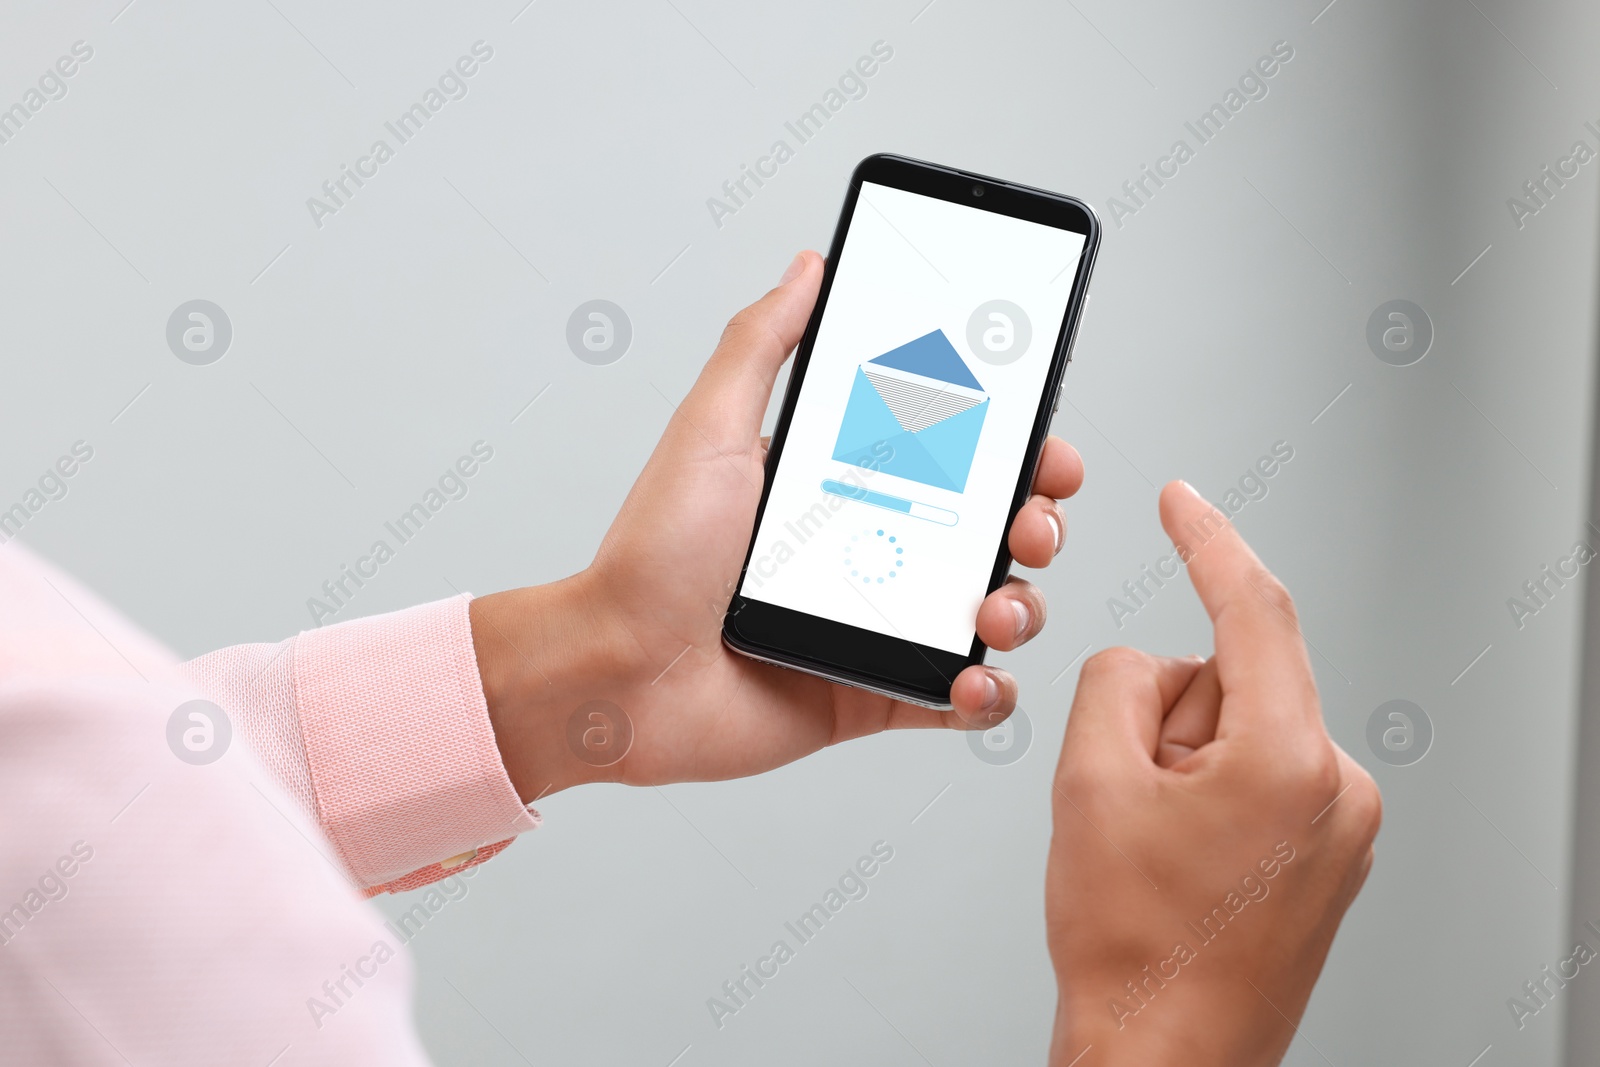 Image of Got new message. Man using smartphone on light grey background, closeup